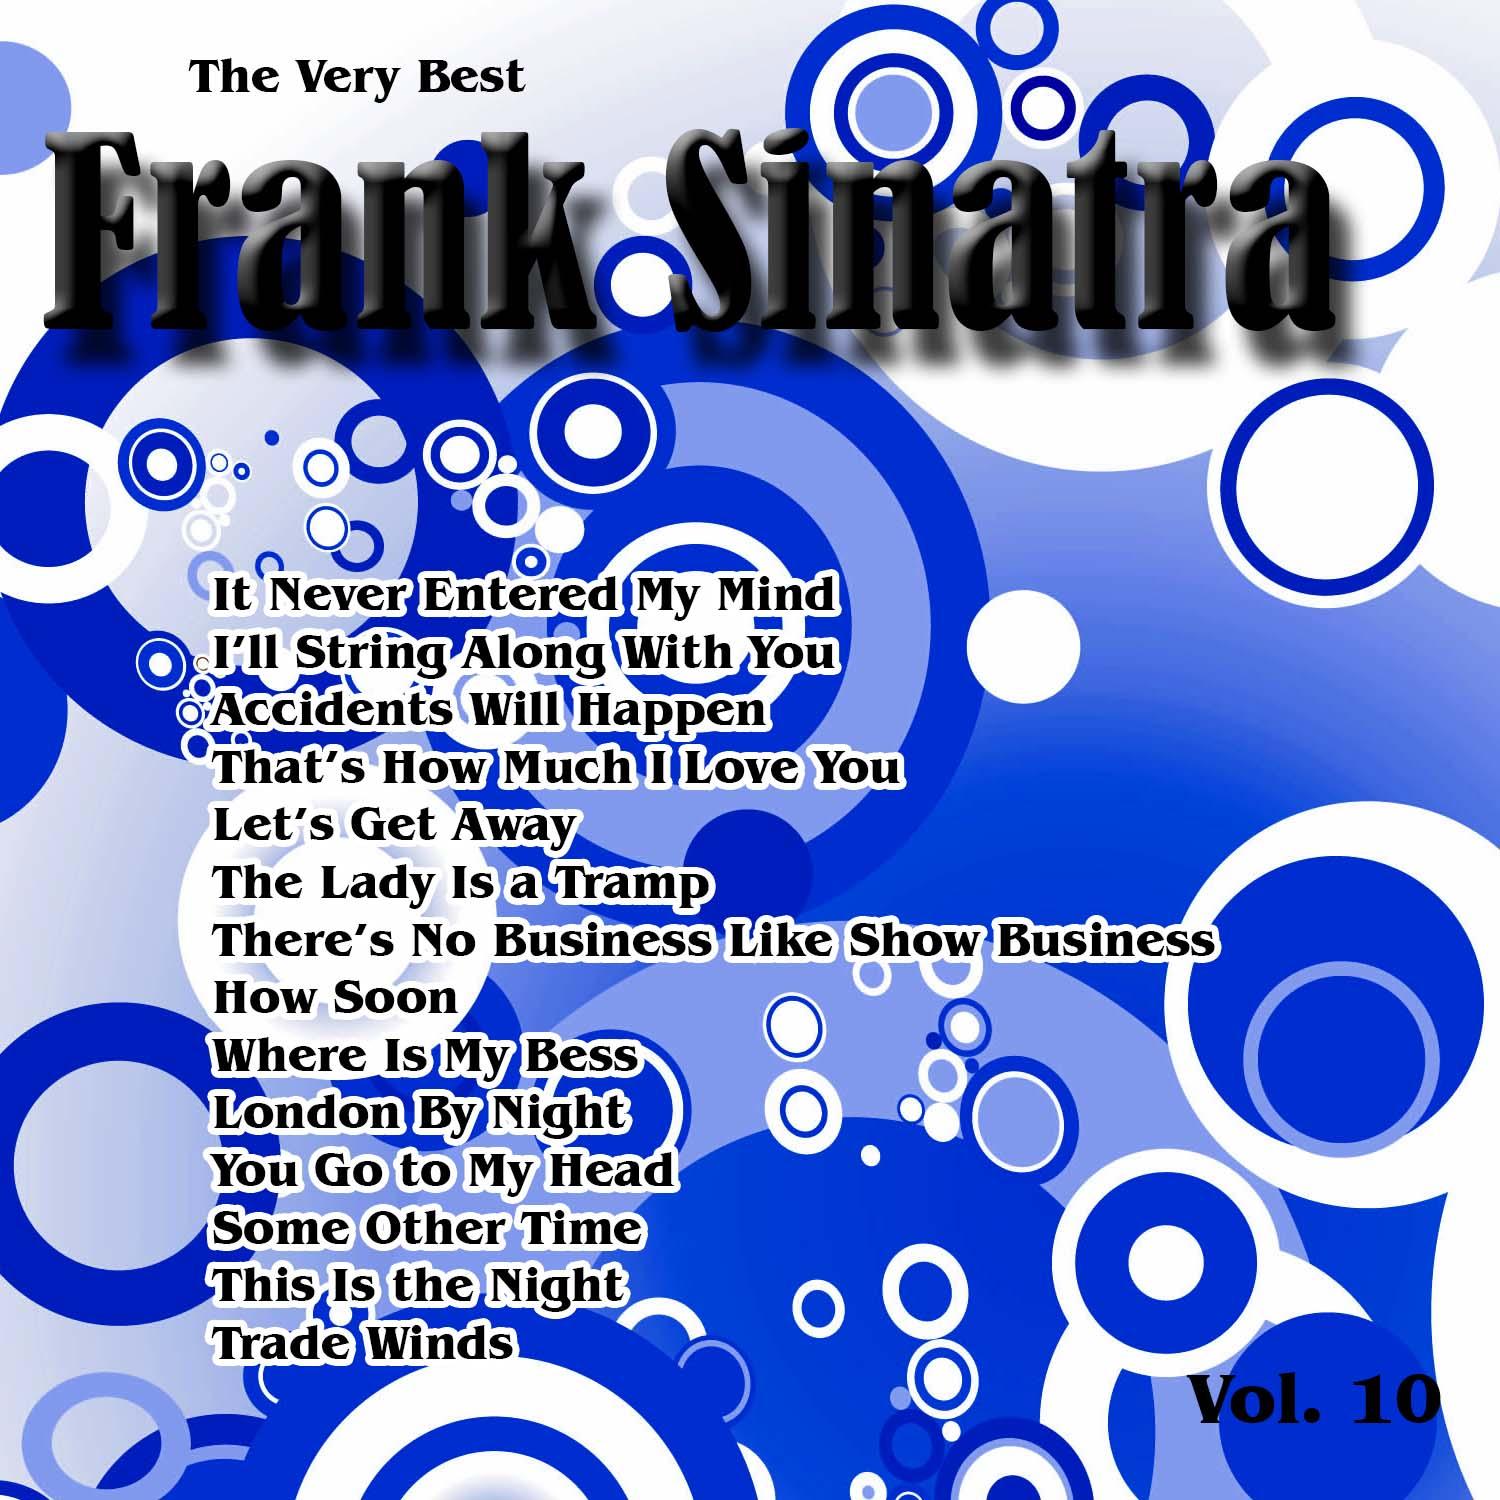 The Very Best: Frank Sinatra Vol. 10